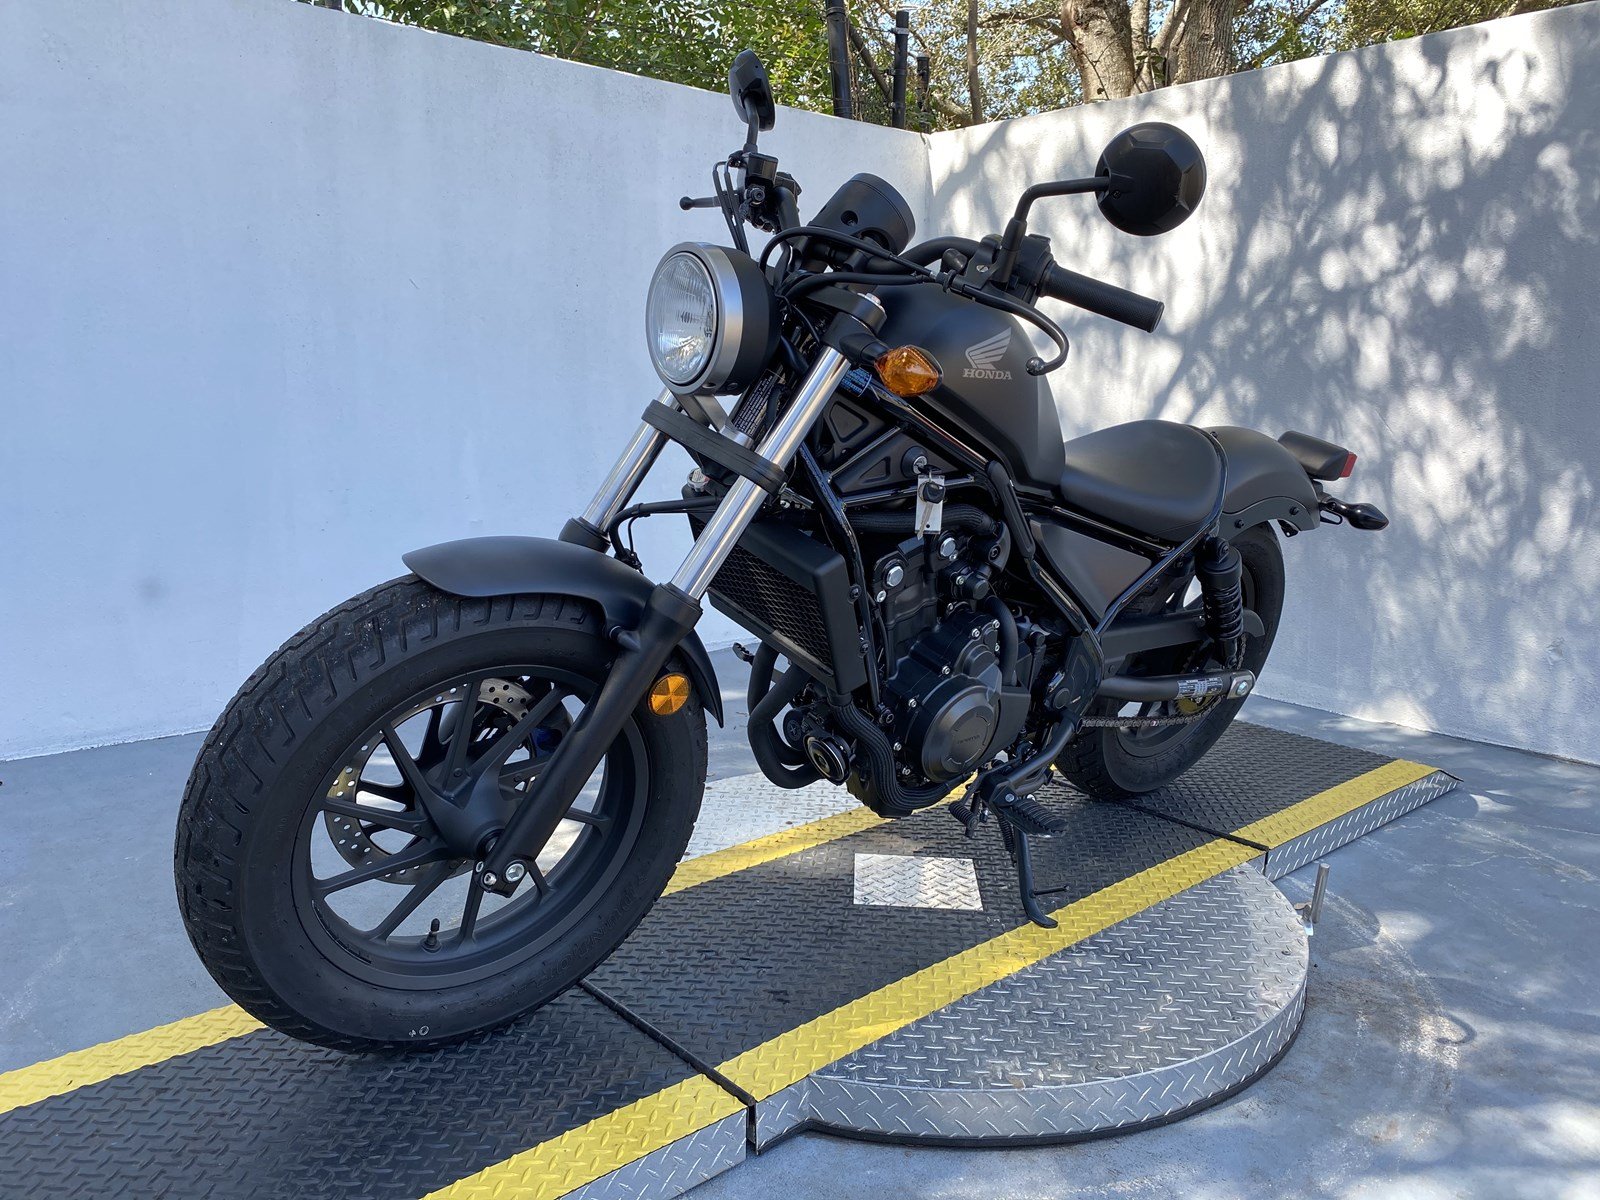 Pre-Owned 2019 Honda Rebel 500 in Fort Myers #W200206 | Rockstar Harley ...